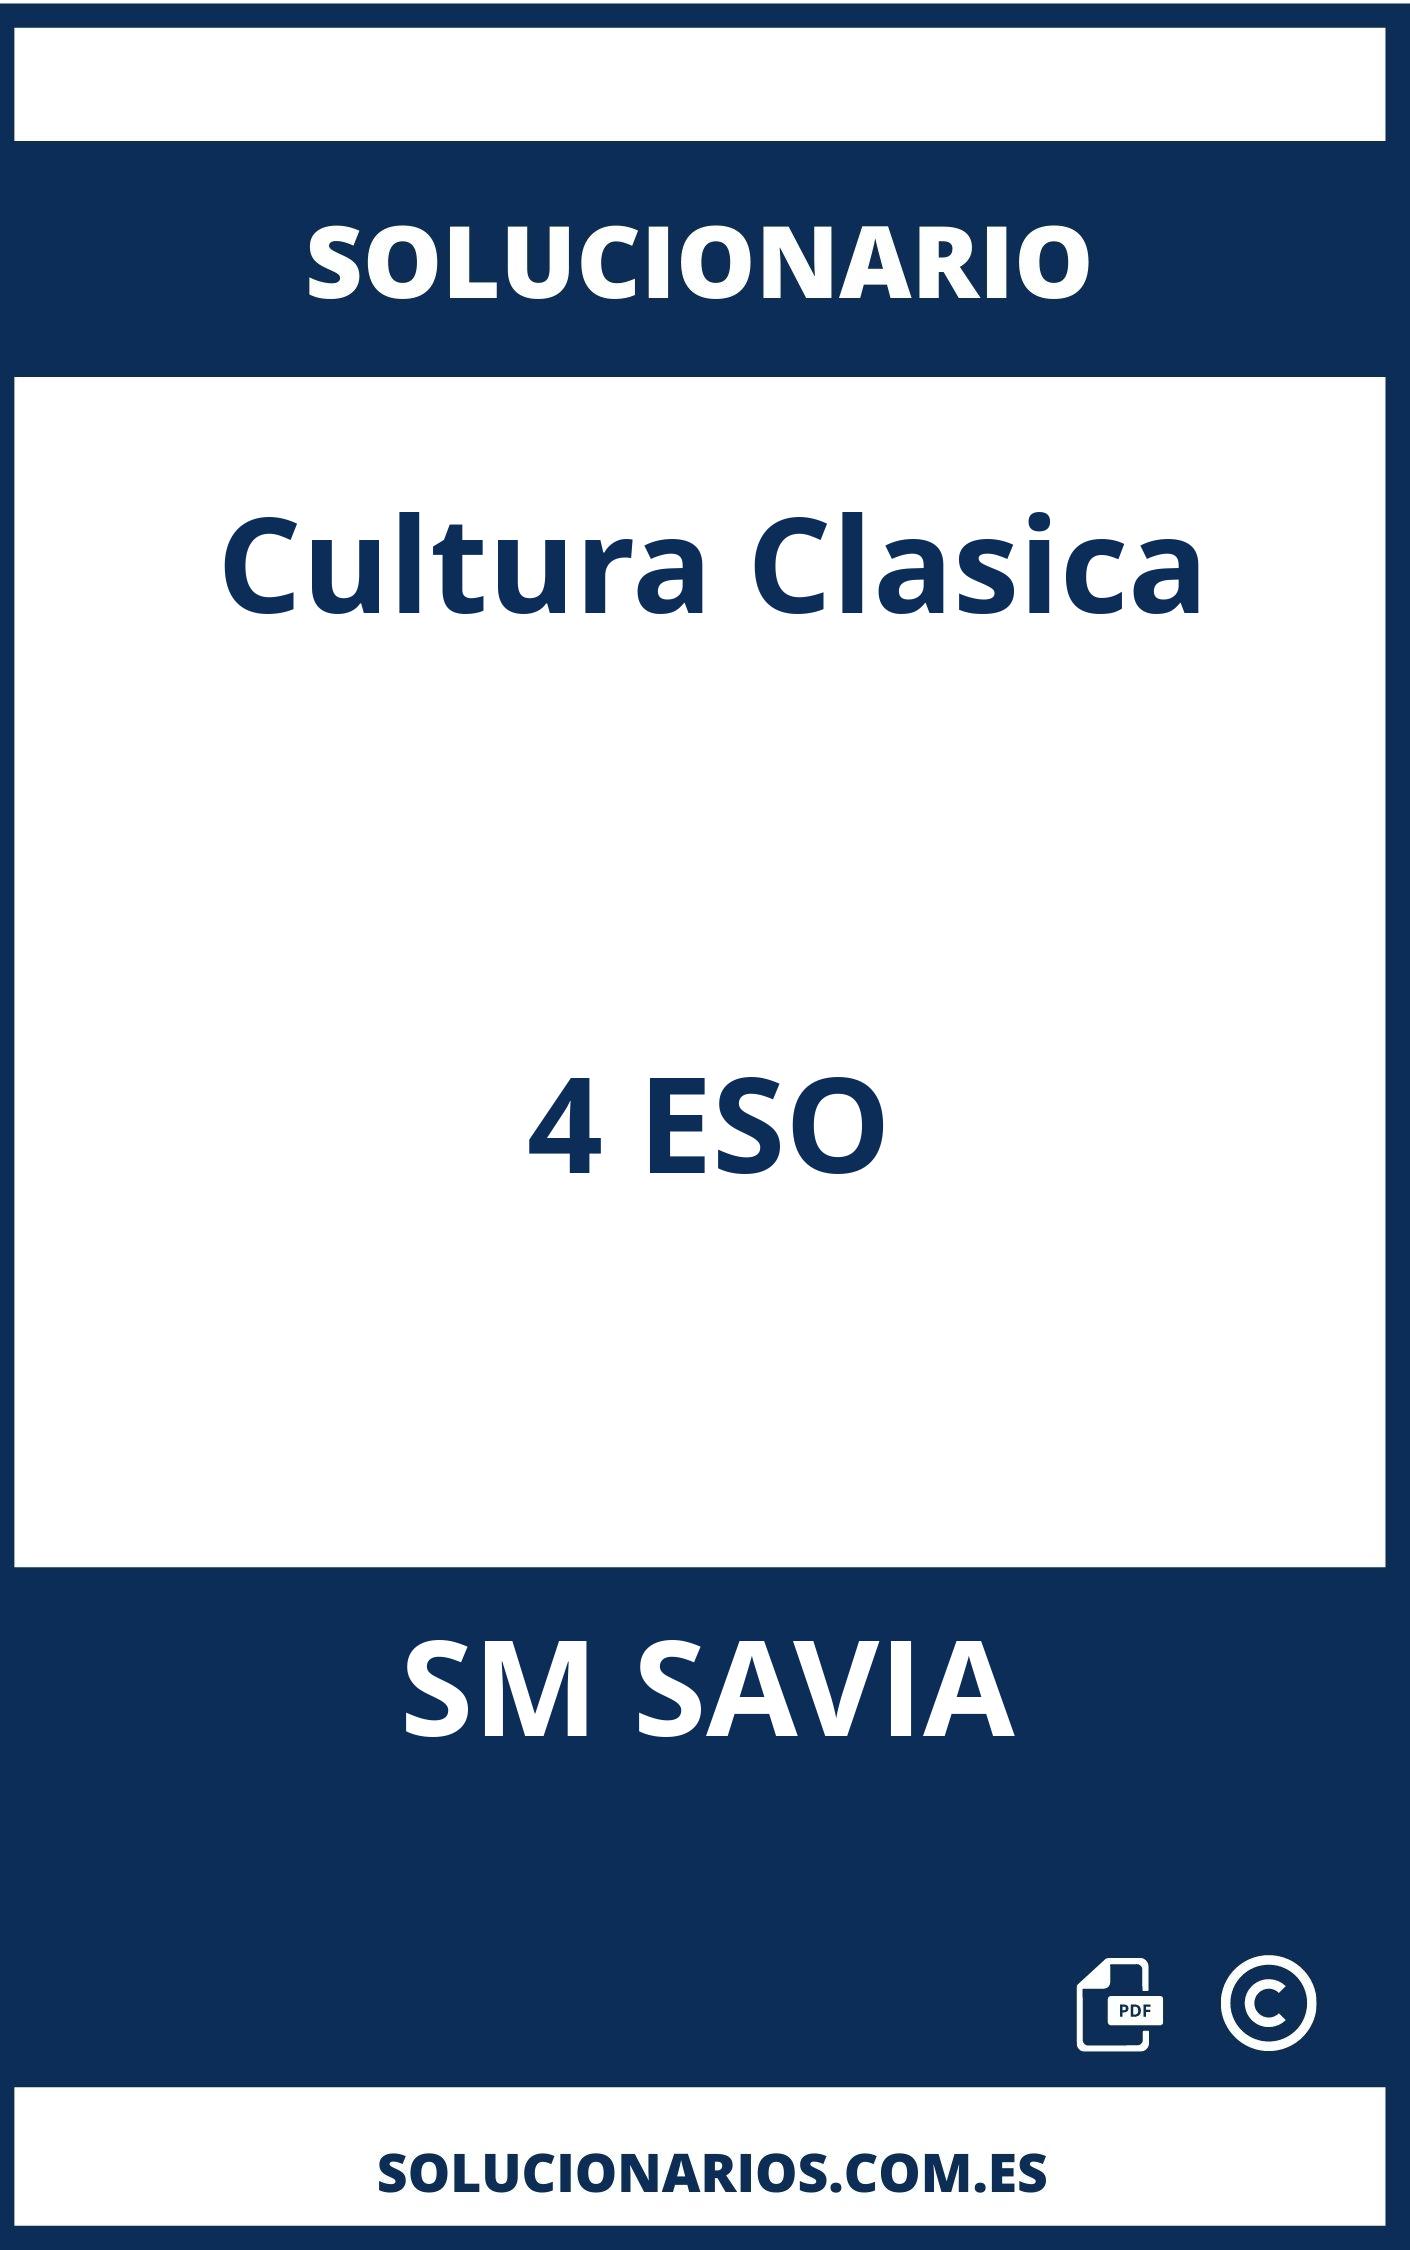 Solucionario Cultura Clasica 4 ESO SM SAVIA